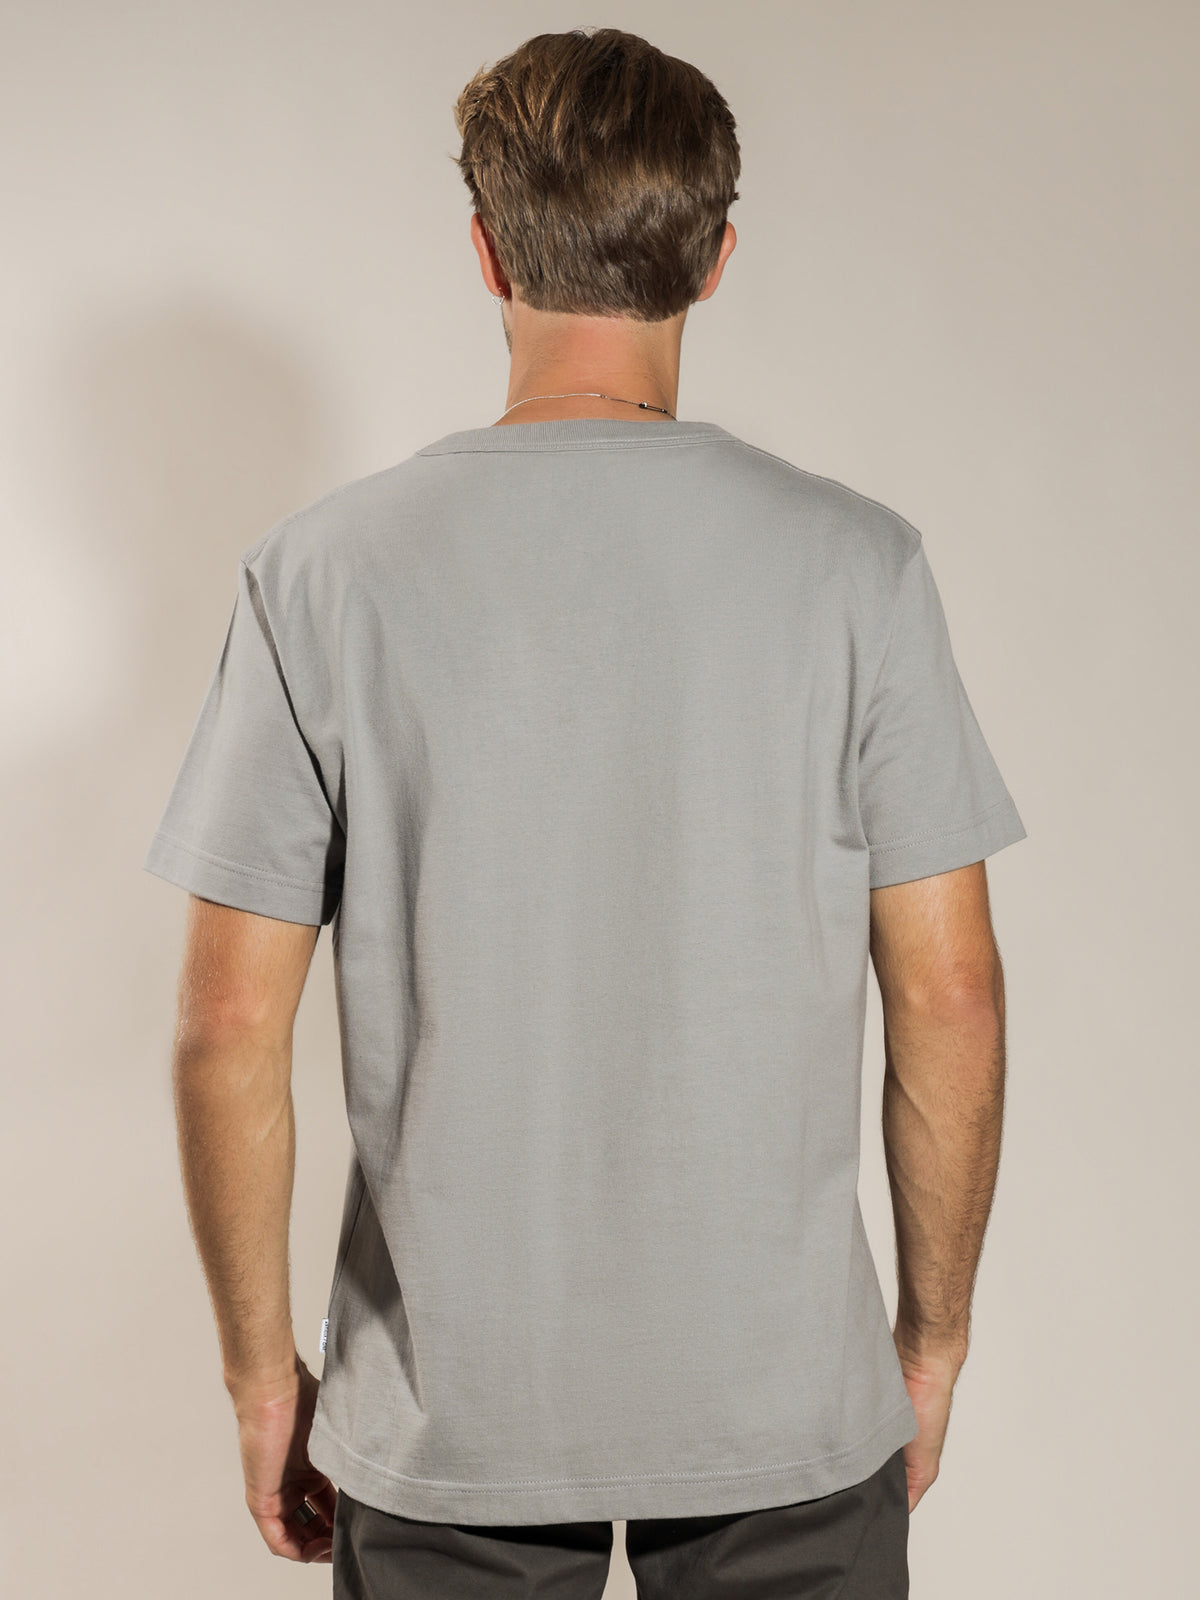 Heavyweight T-Shirt in Dove Grey